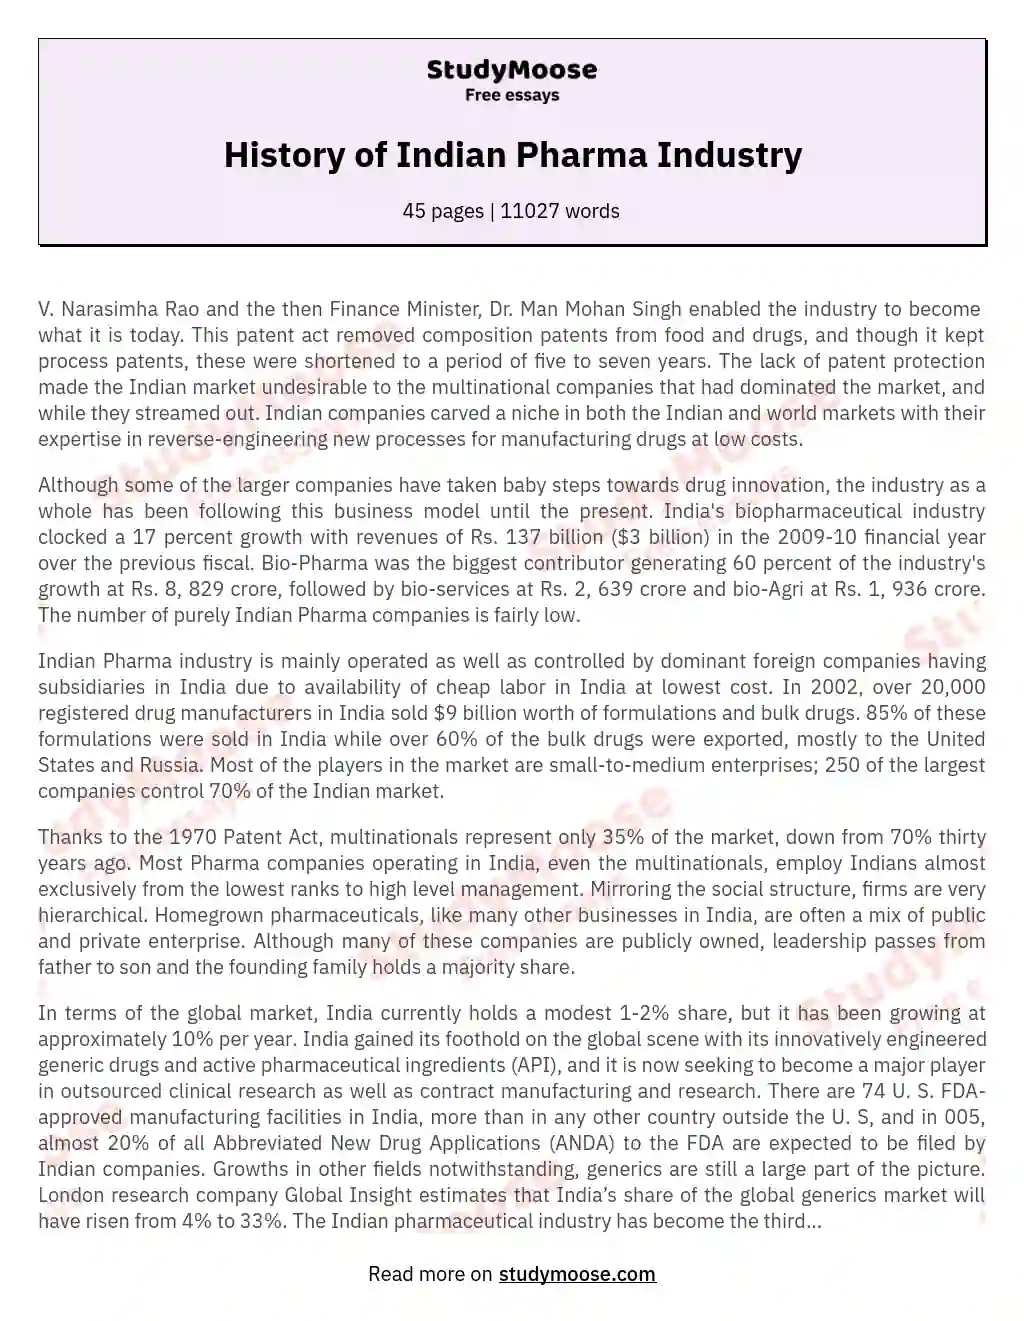 History of Indian Pharma Industry essay